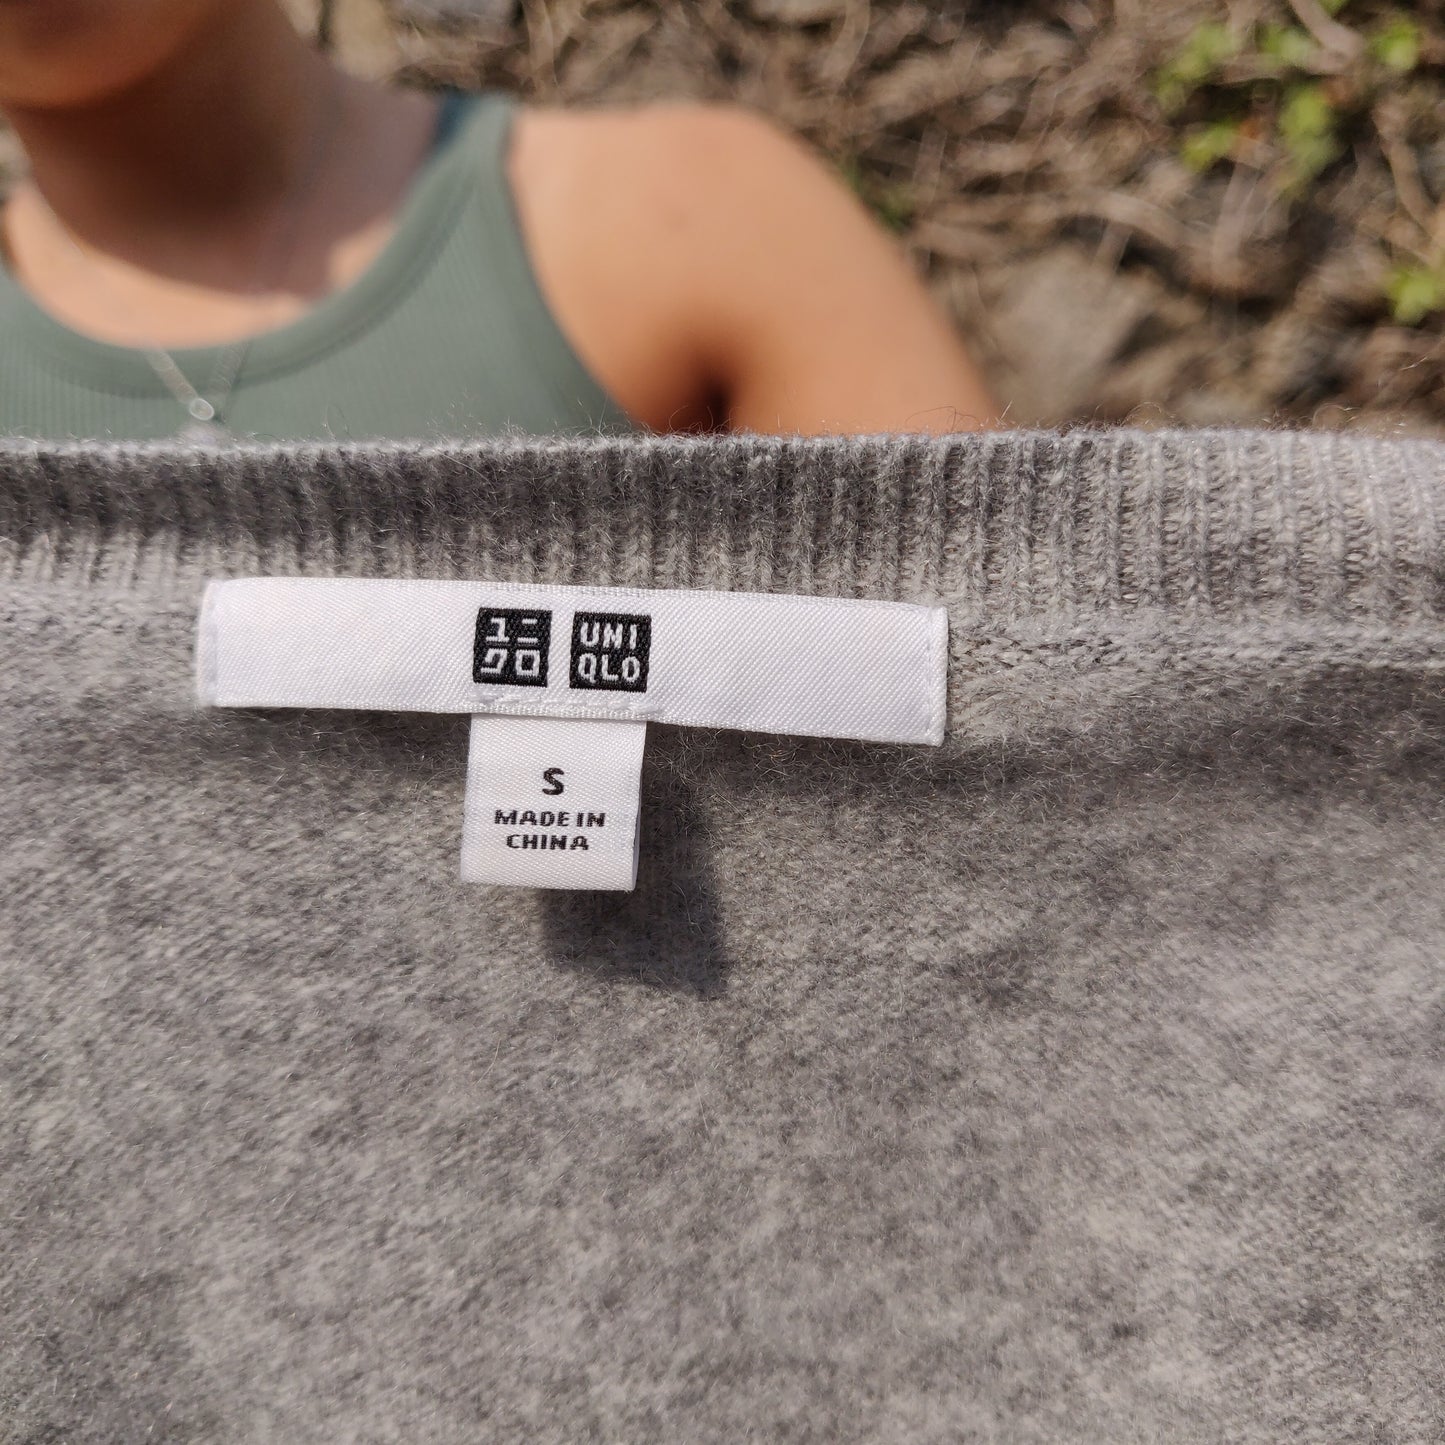 Uniqlo Grey 100% Cashmere V-Neck Jumper Sweater Women Size Small UK 6 8